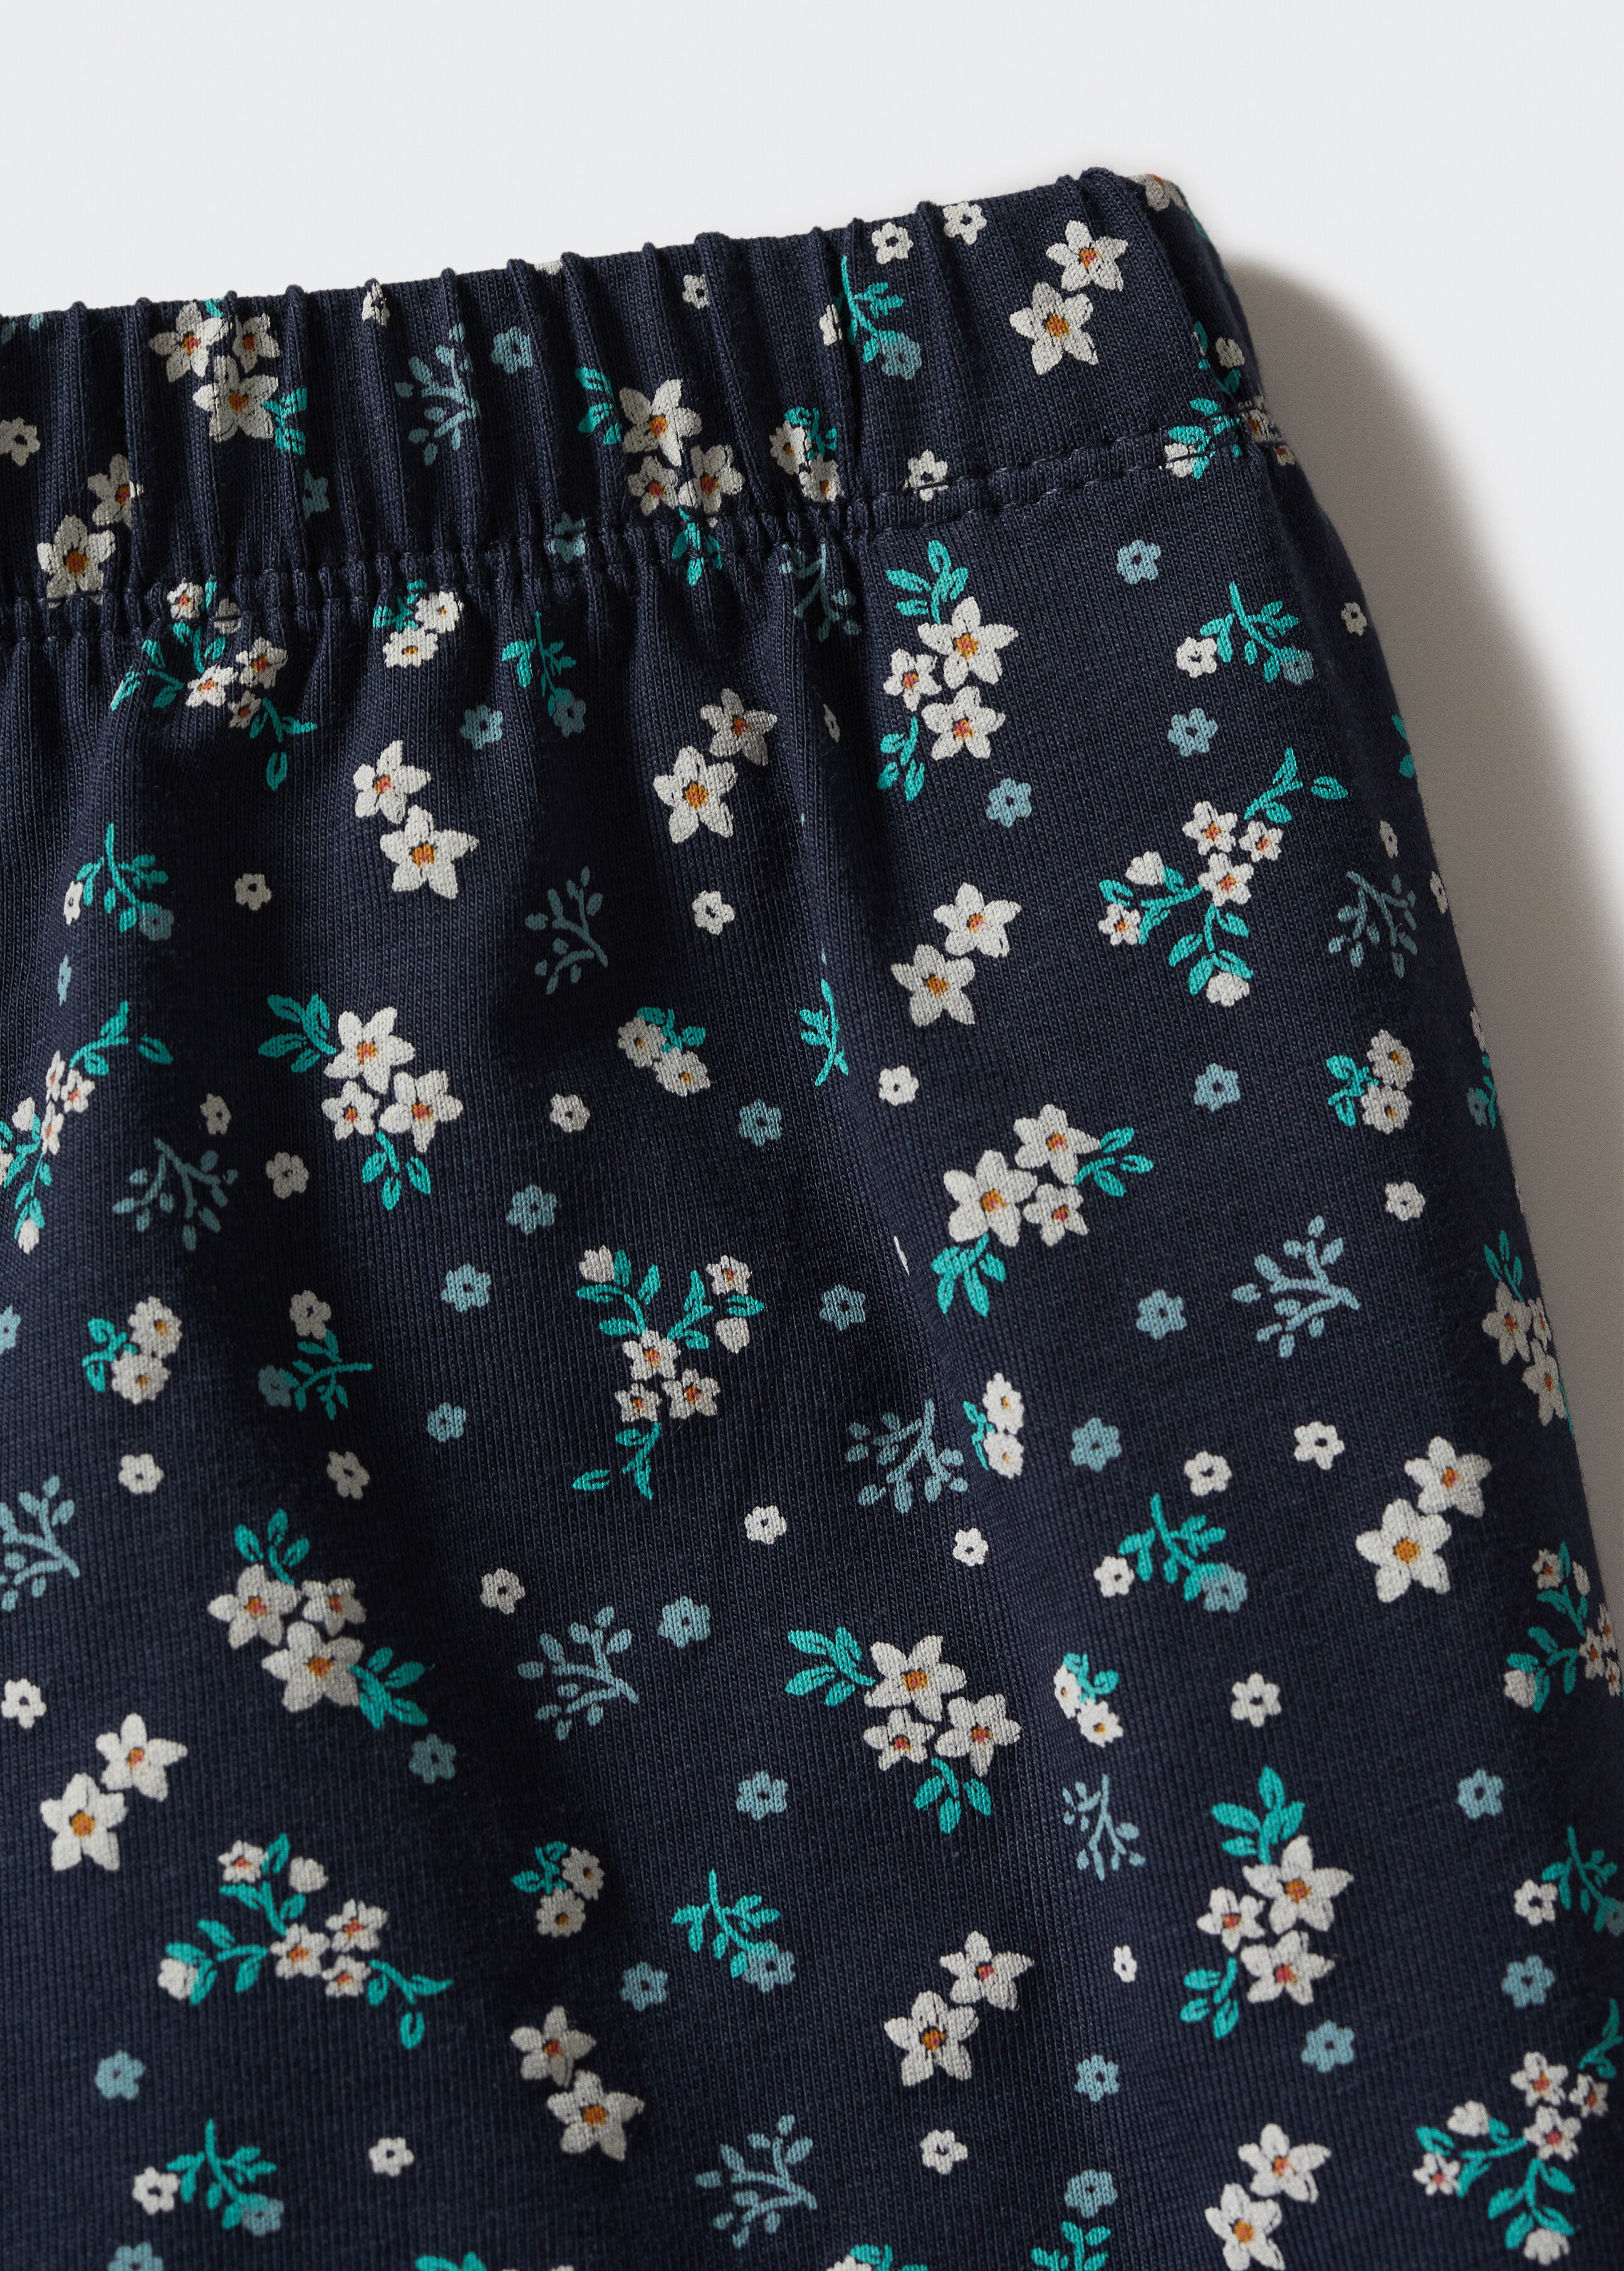 Floral cotton pyjamas - Details of the article 9